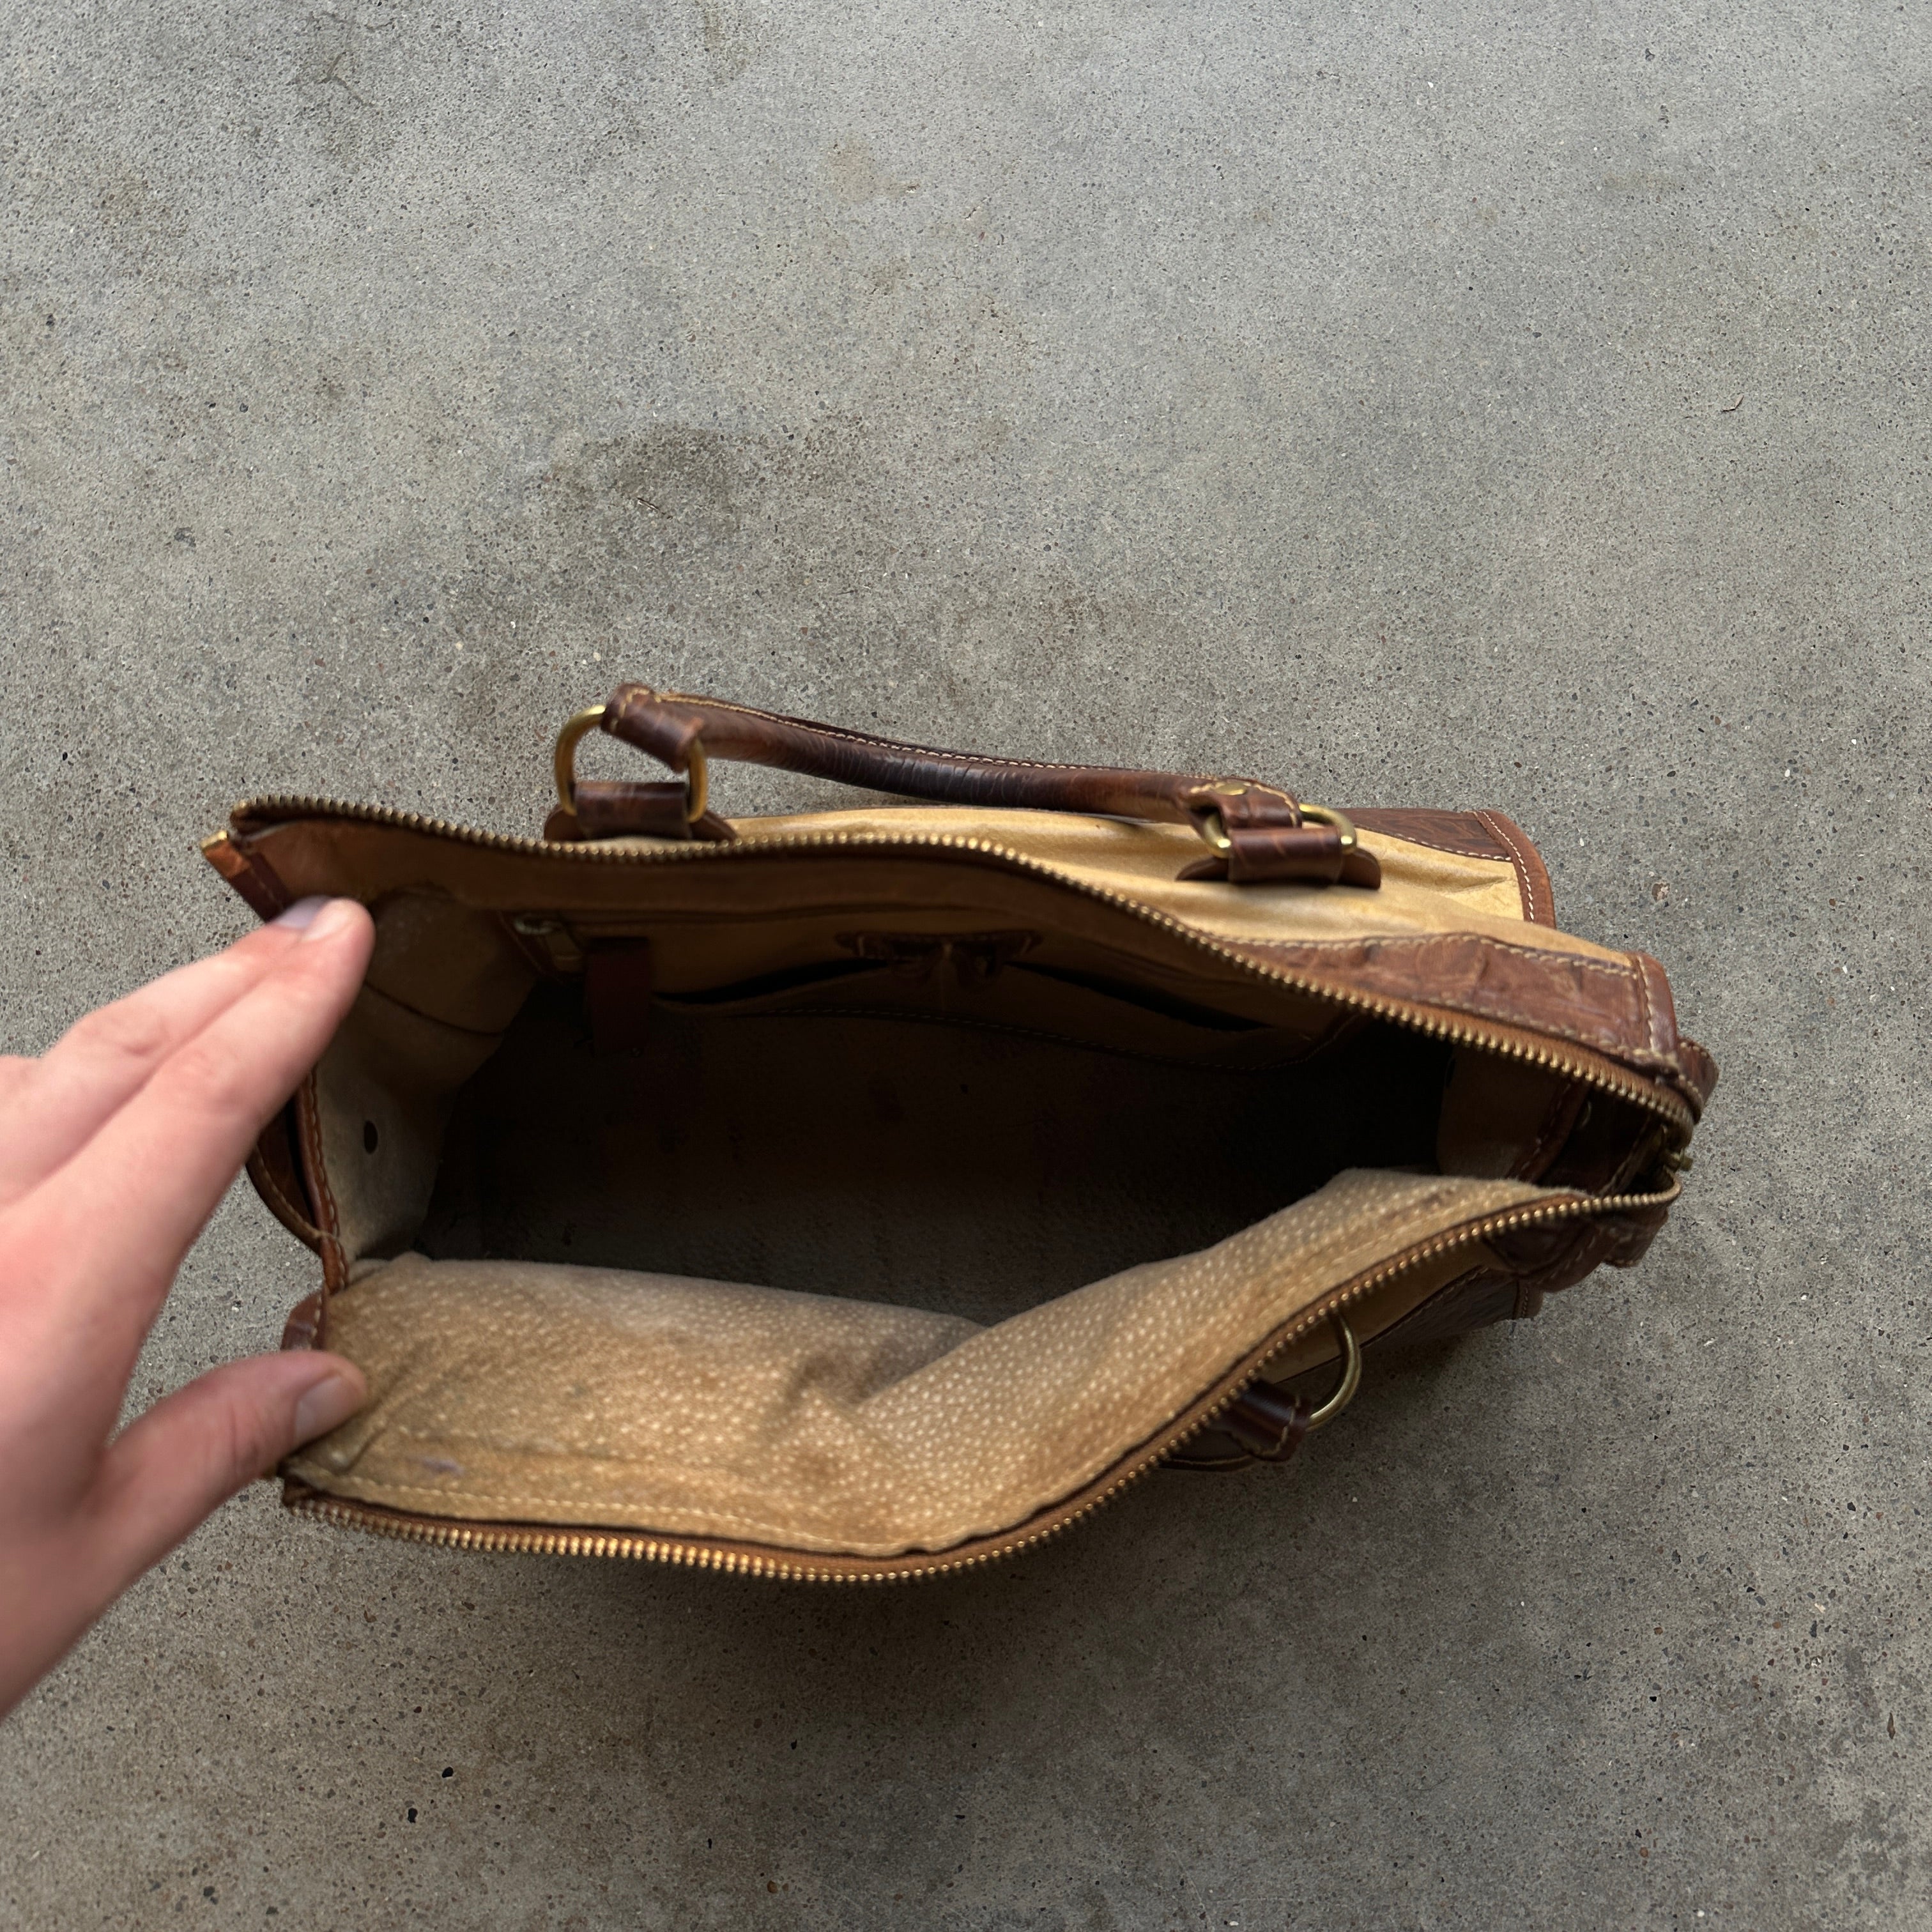 “Brahmin” Croc & Leather Handbag